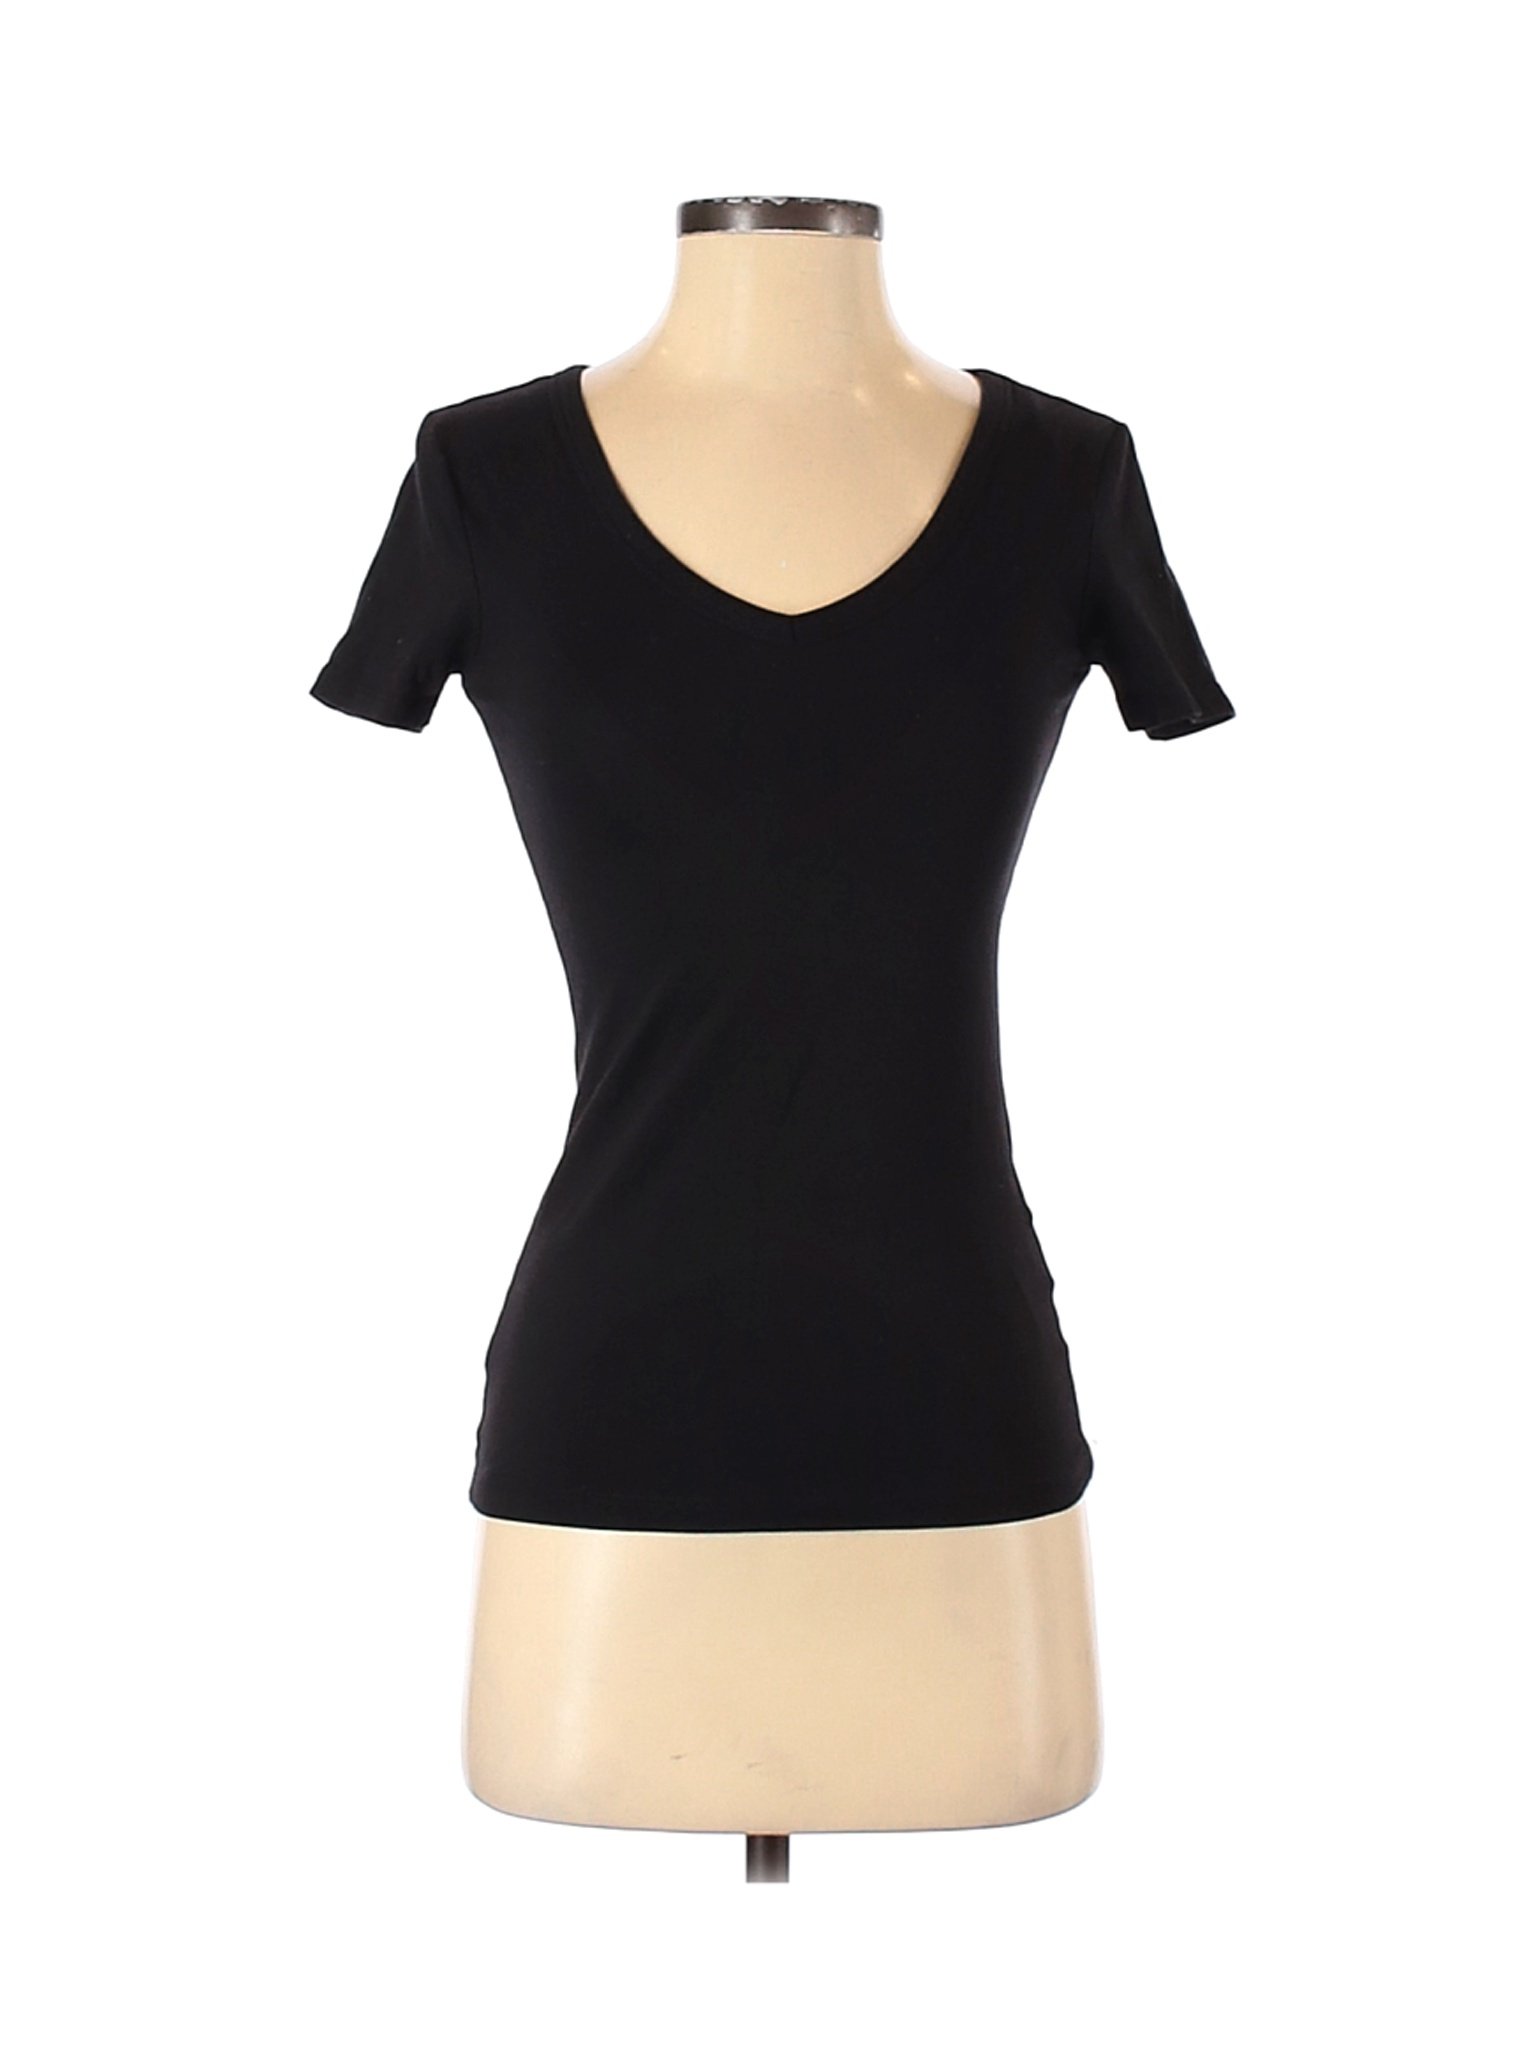 H&M Women Black Short Sleeve T-Shirt XS | eBay